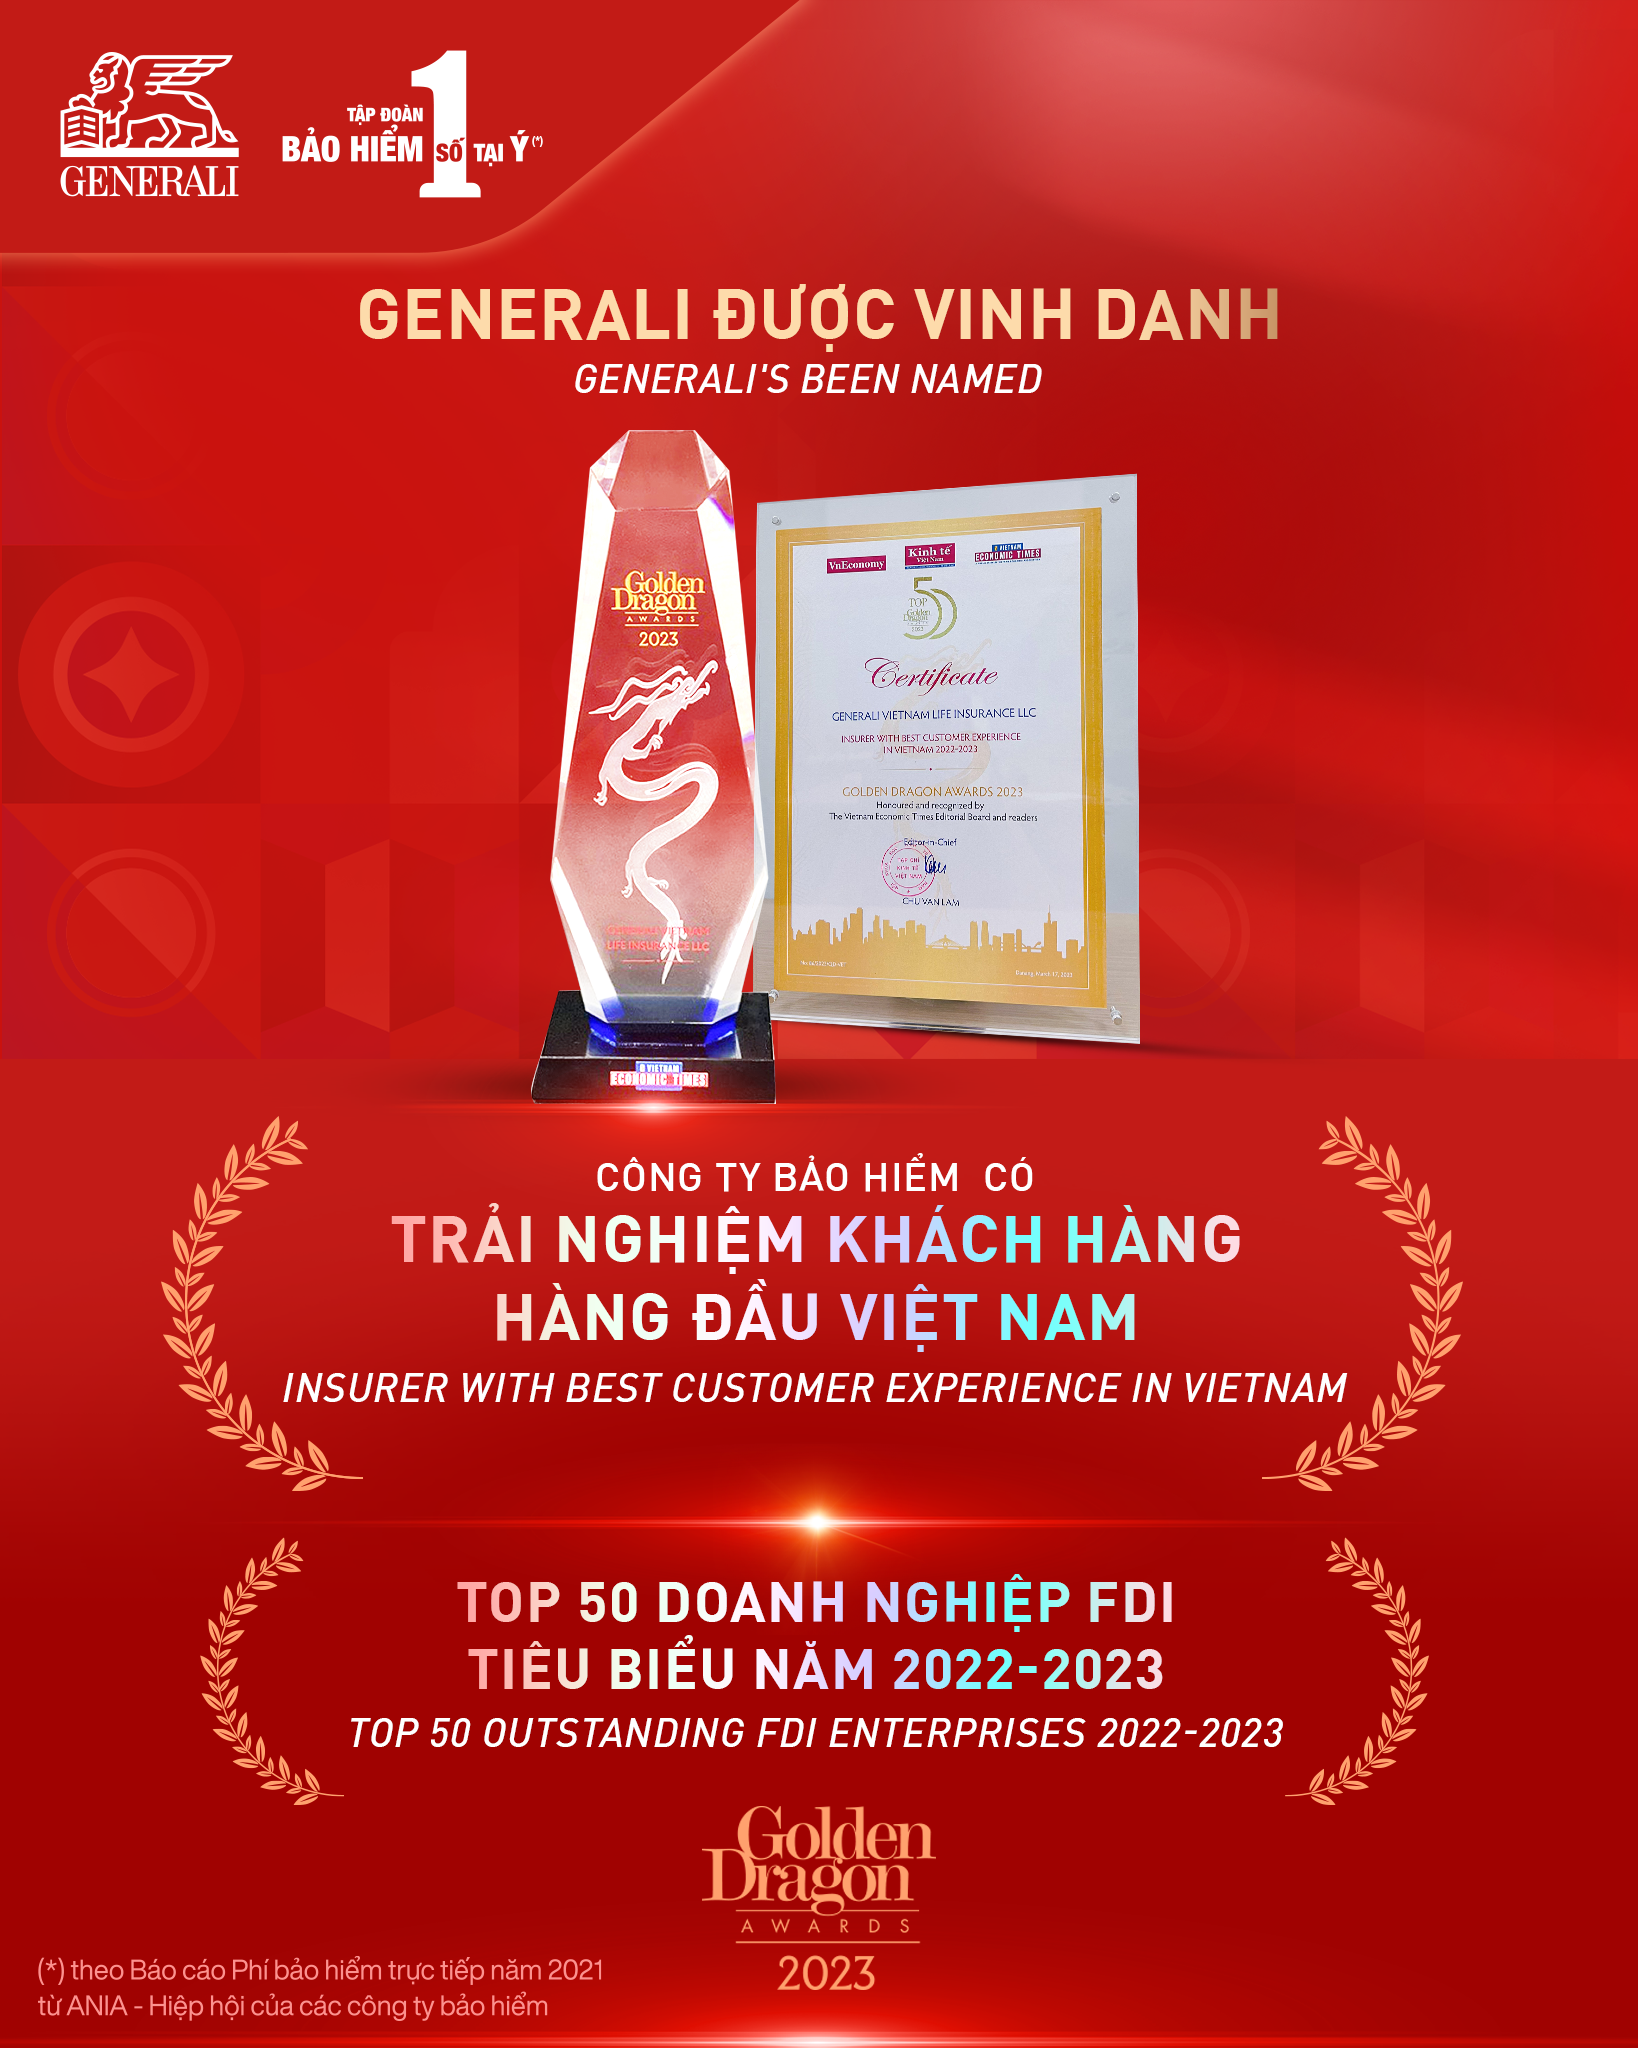 Generali named insurer with best customer experience in Vietnam